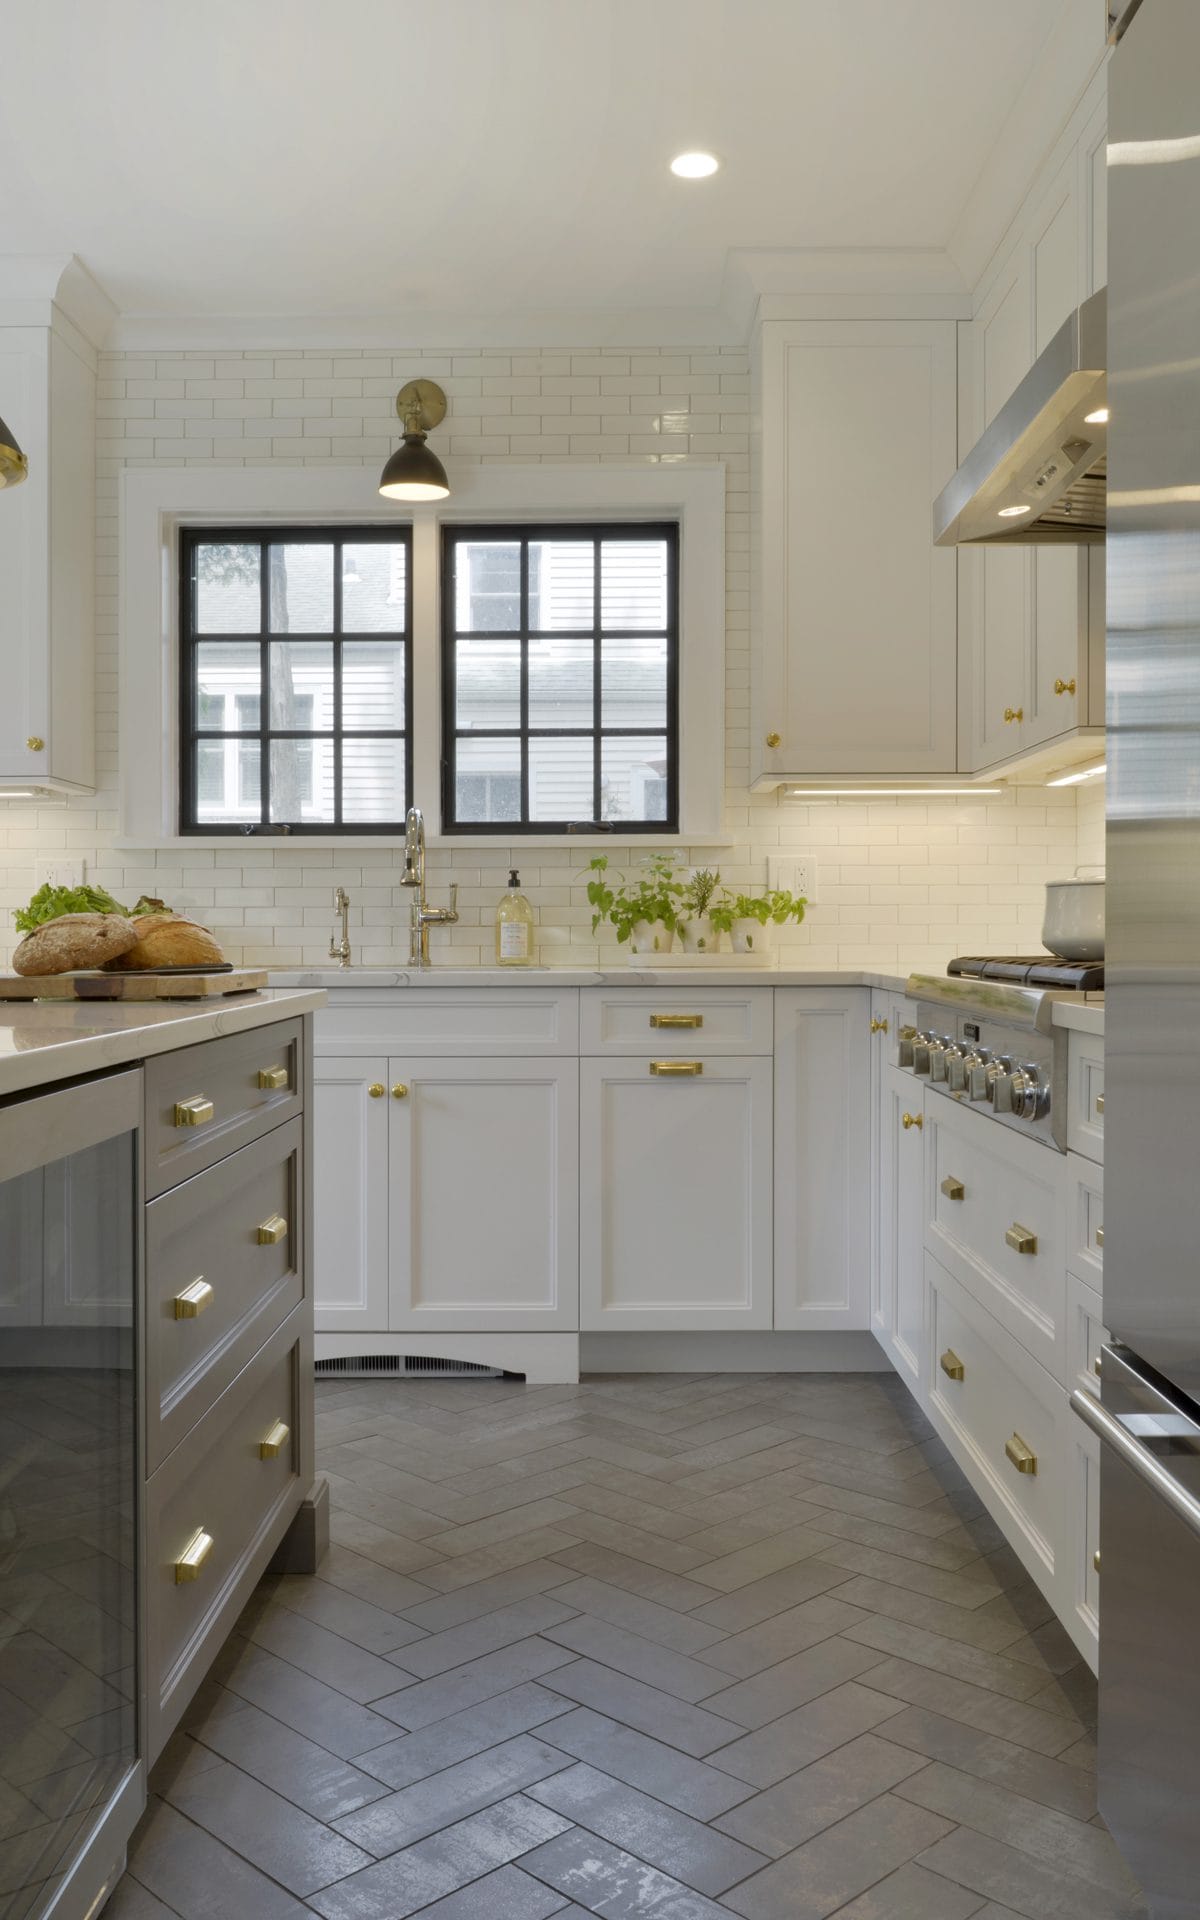 Classic White & Grey Kitchen with Herringbone floor and Black Window Frames